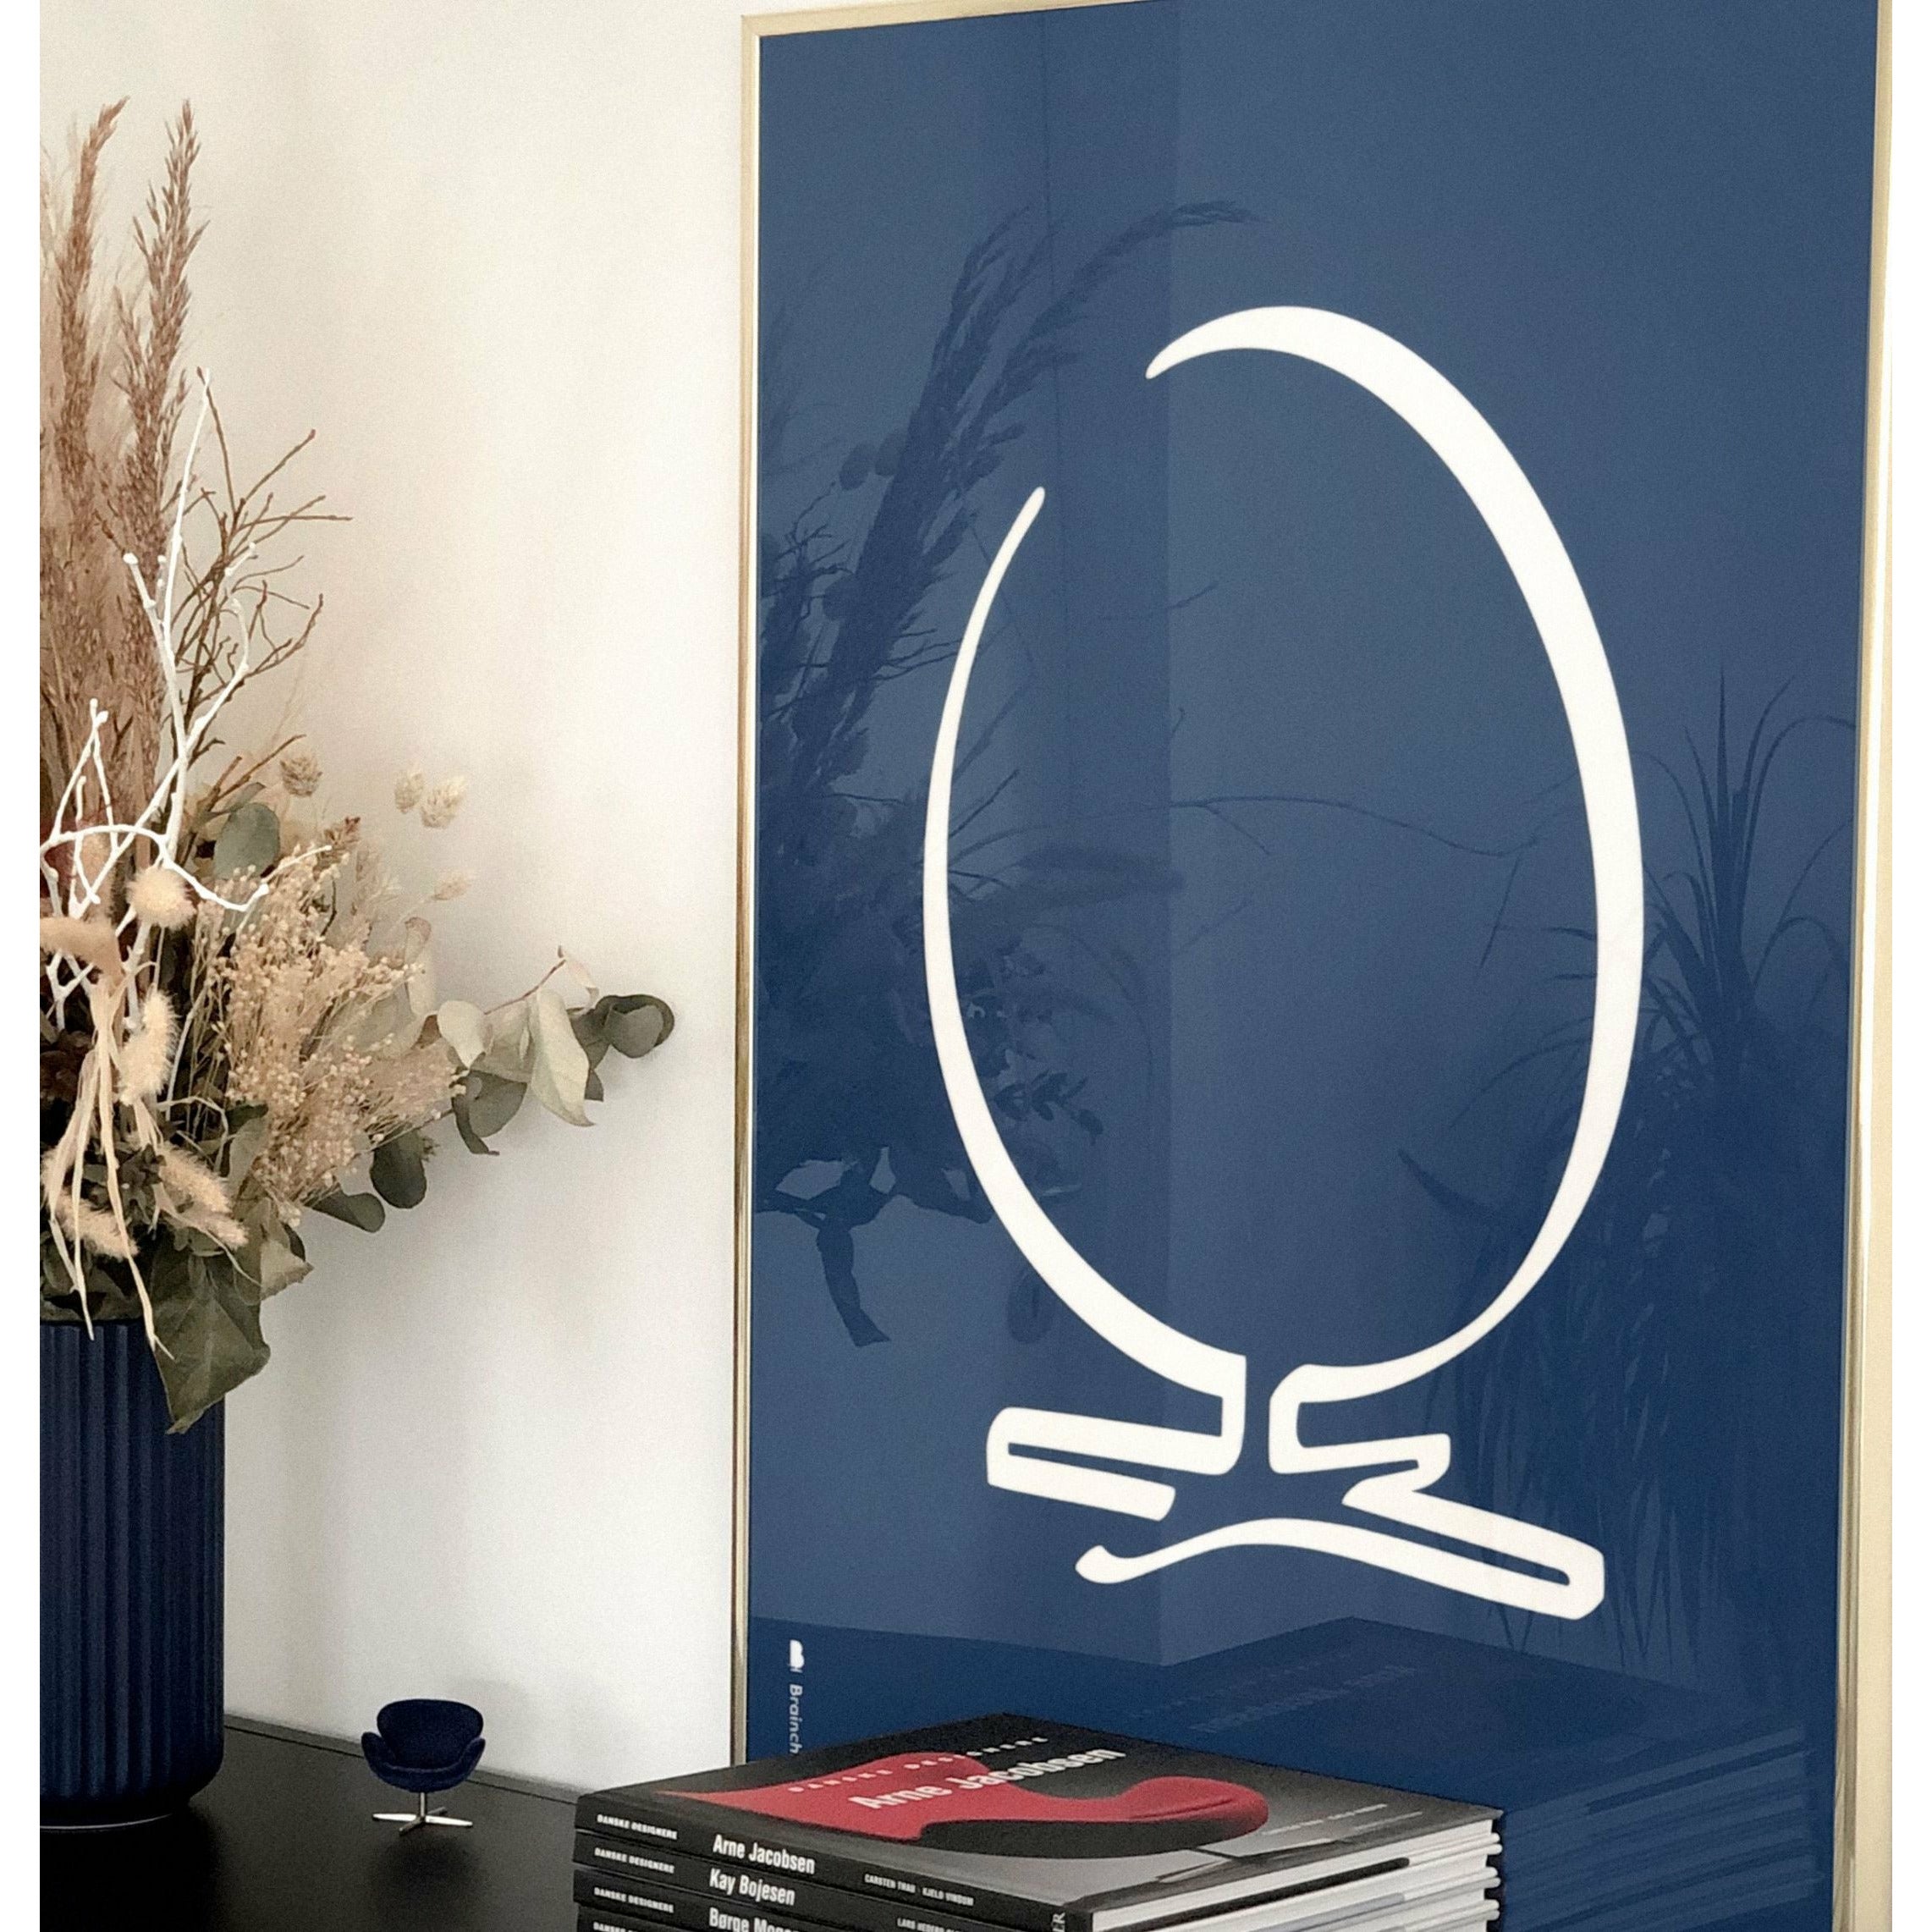 Brainchild Egg Line Poster, Frame Made Of Light Wood 50x70 Cm, Blue Background